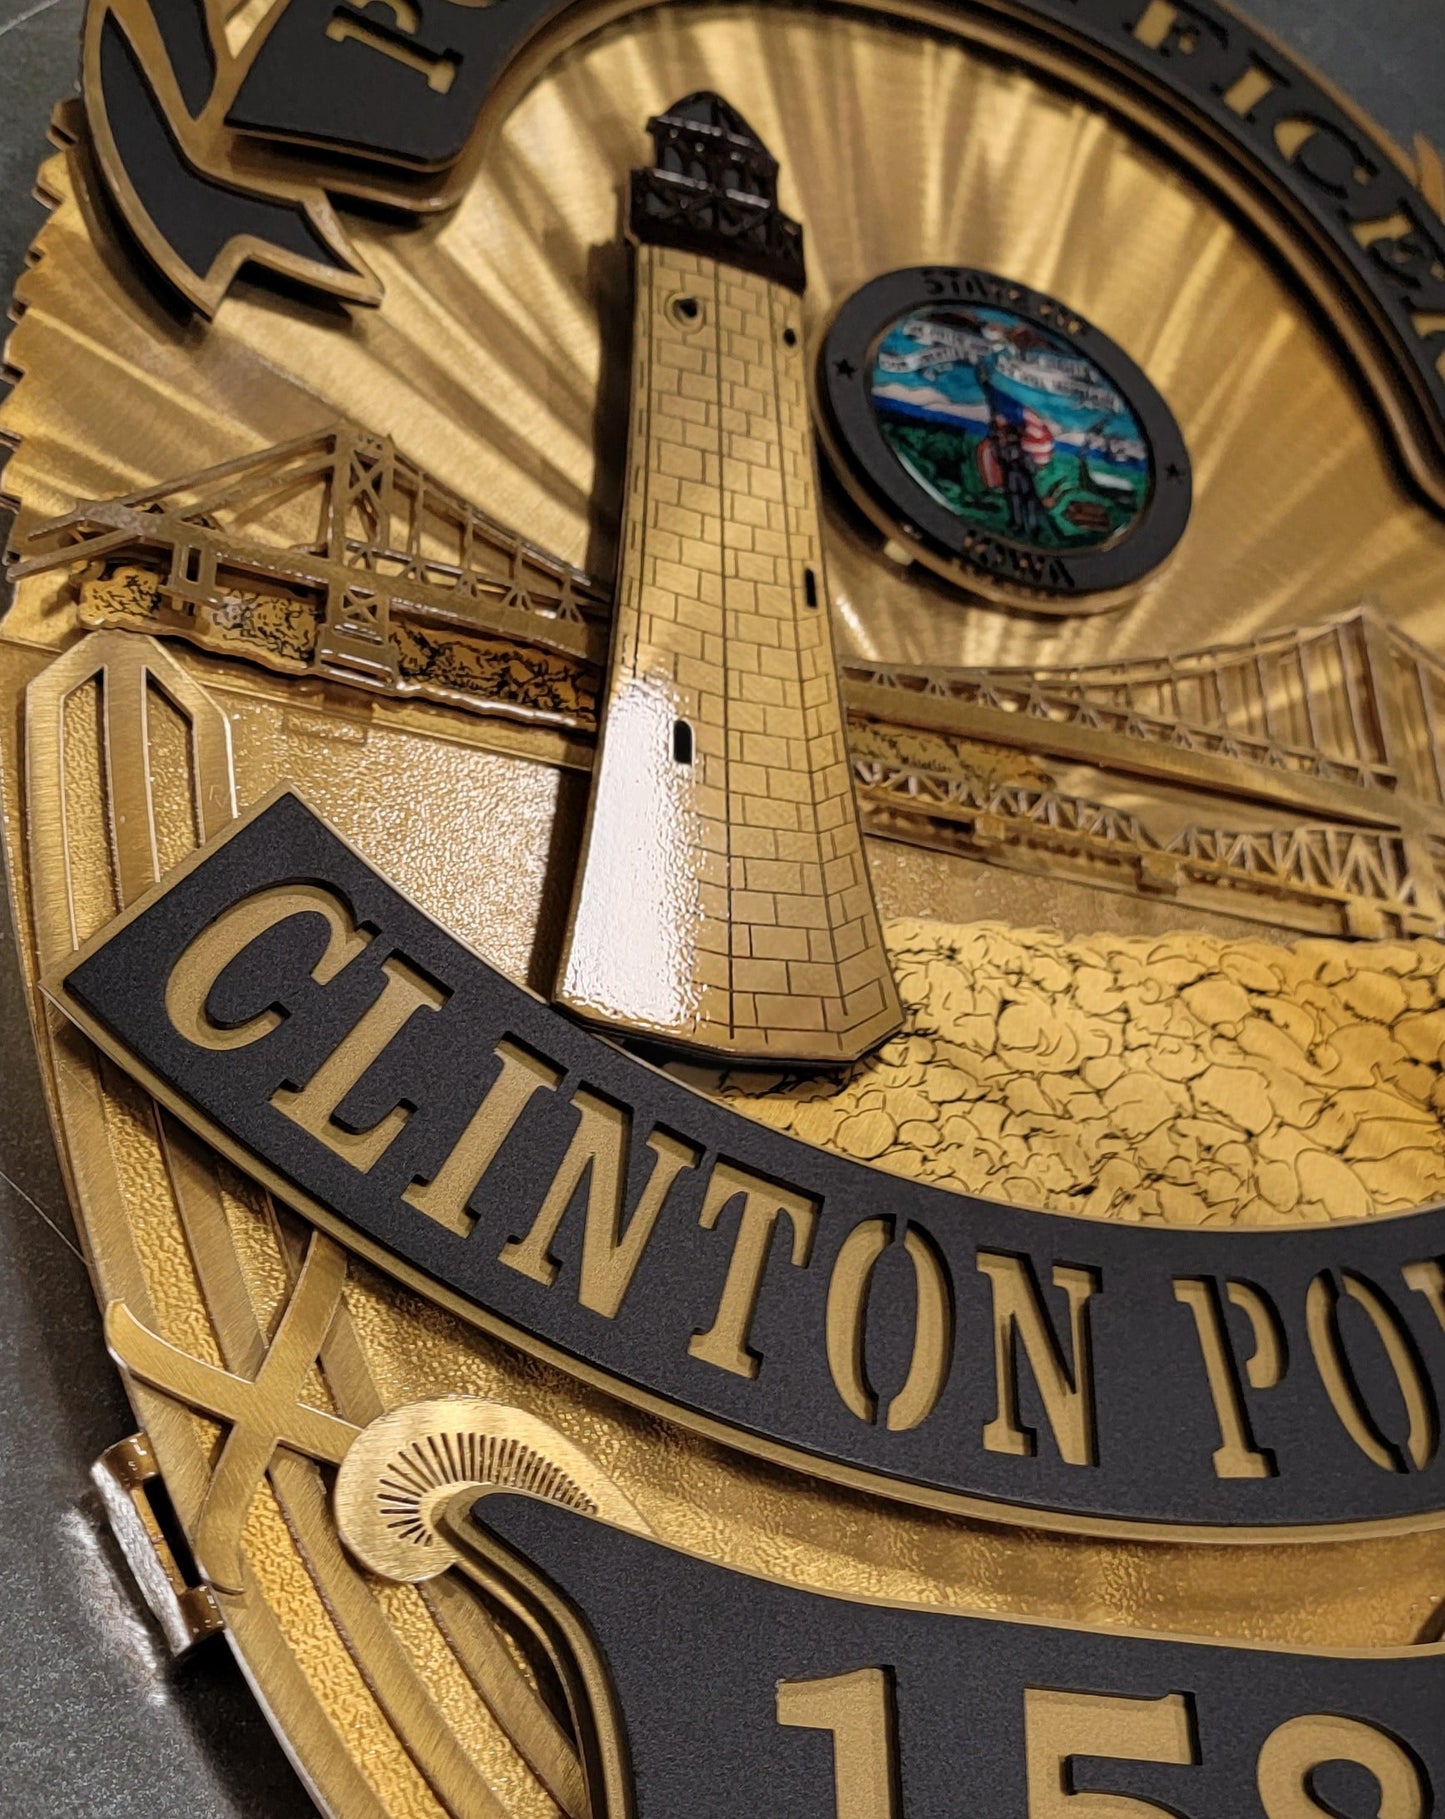 Clinton Police Badge